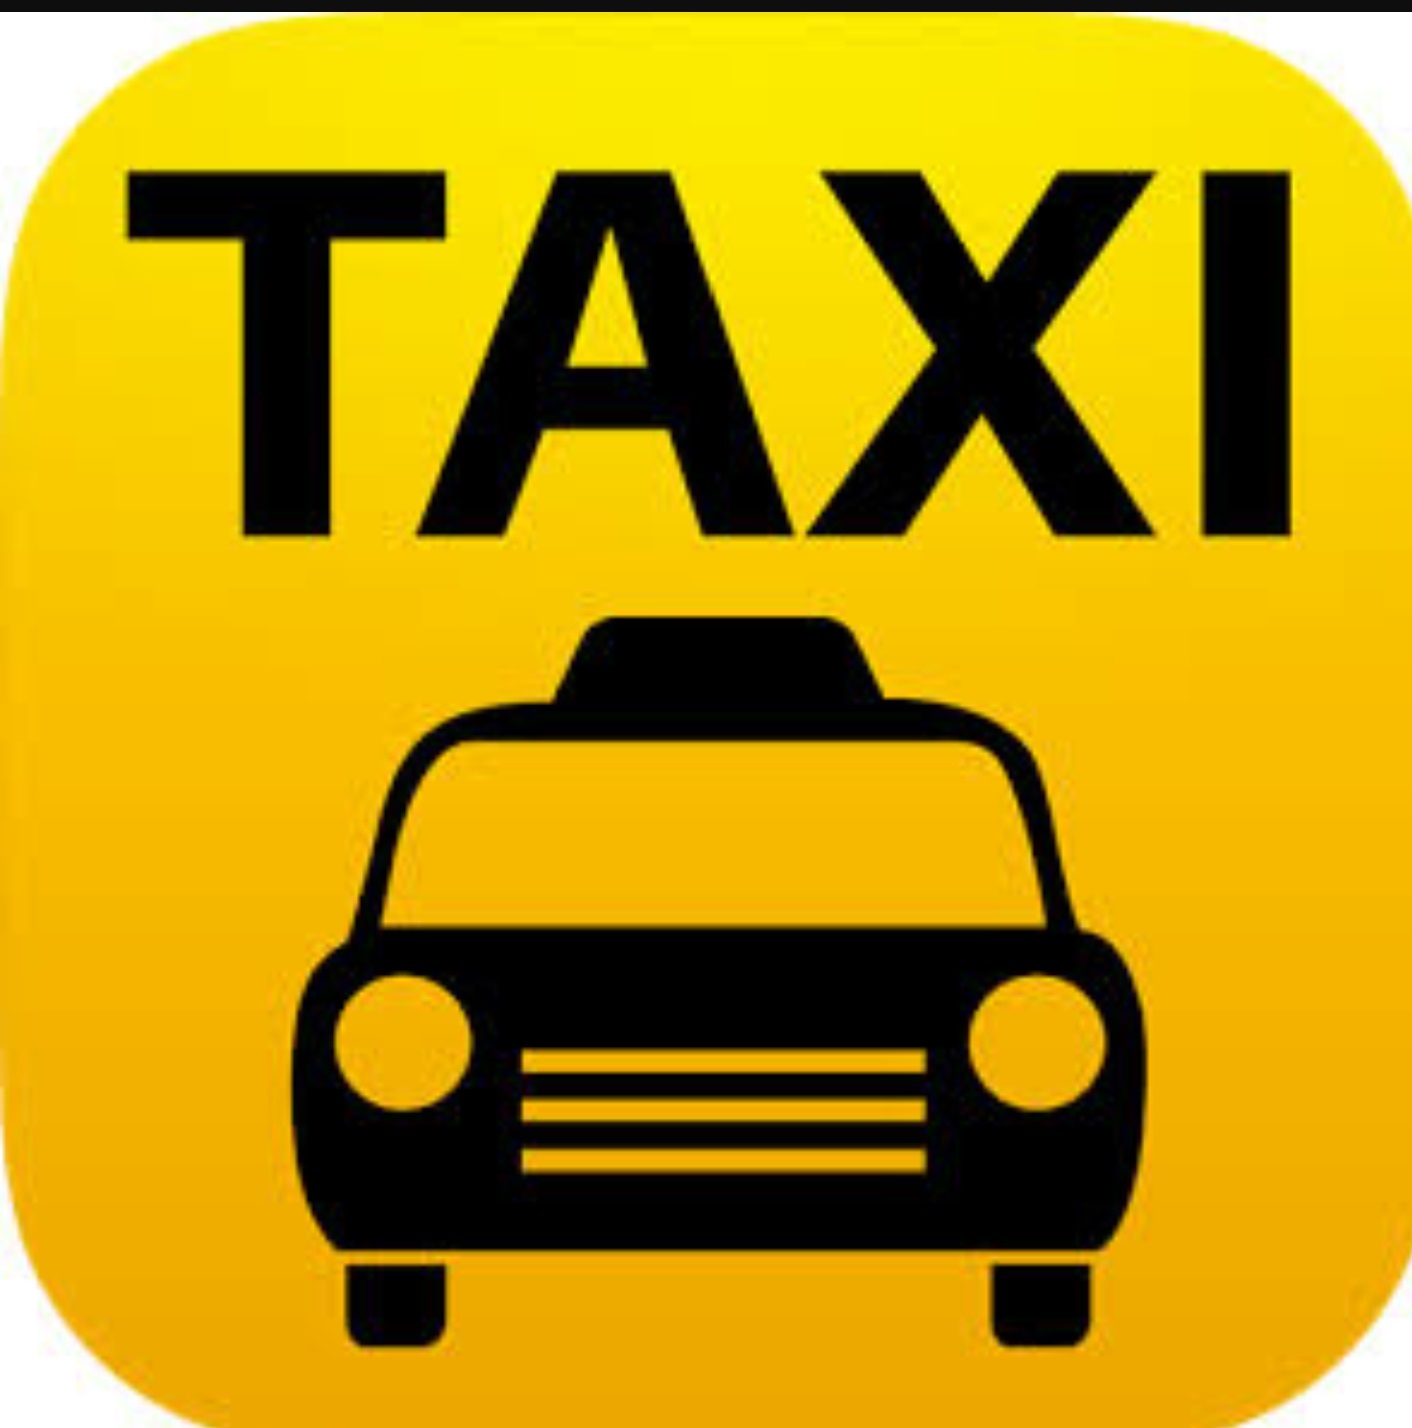 Такси салым. Значок такси. Логотип такси. Символ такси. Такса значок.